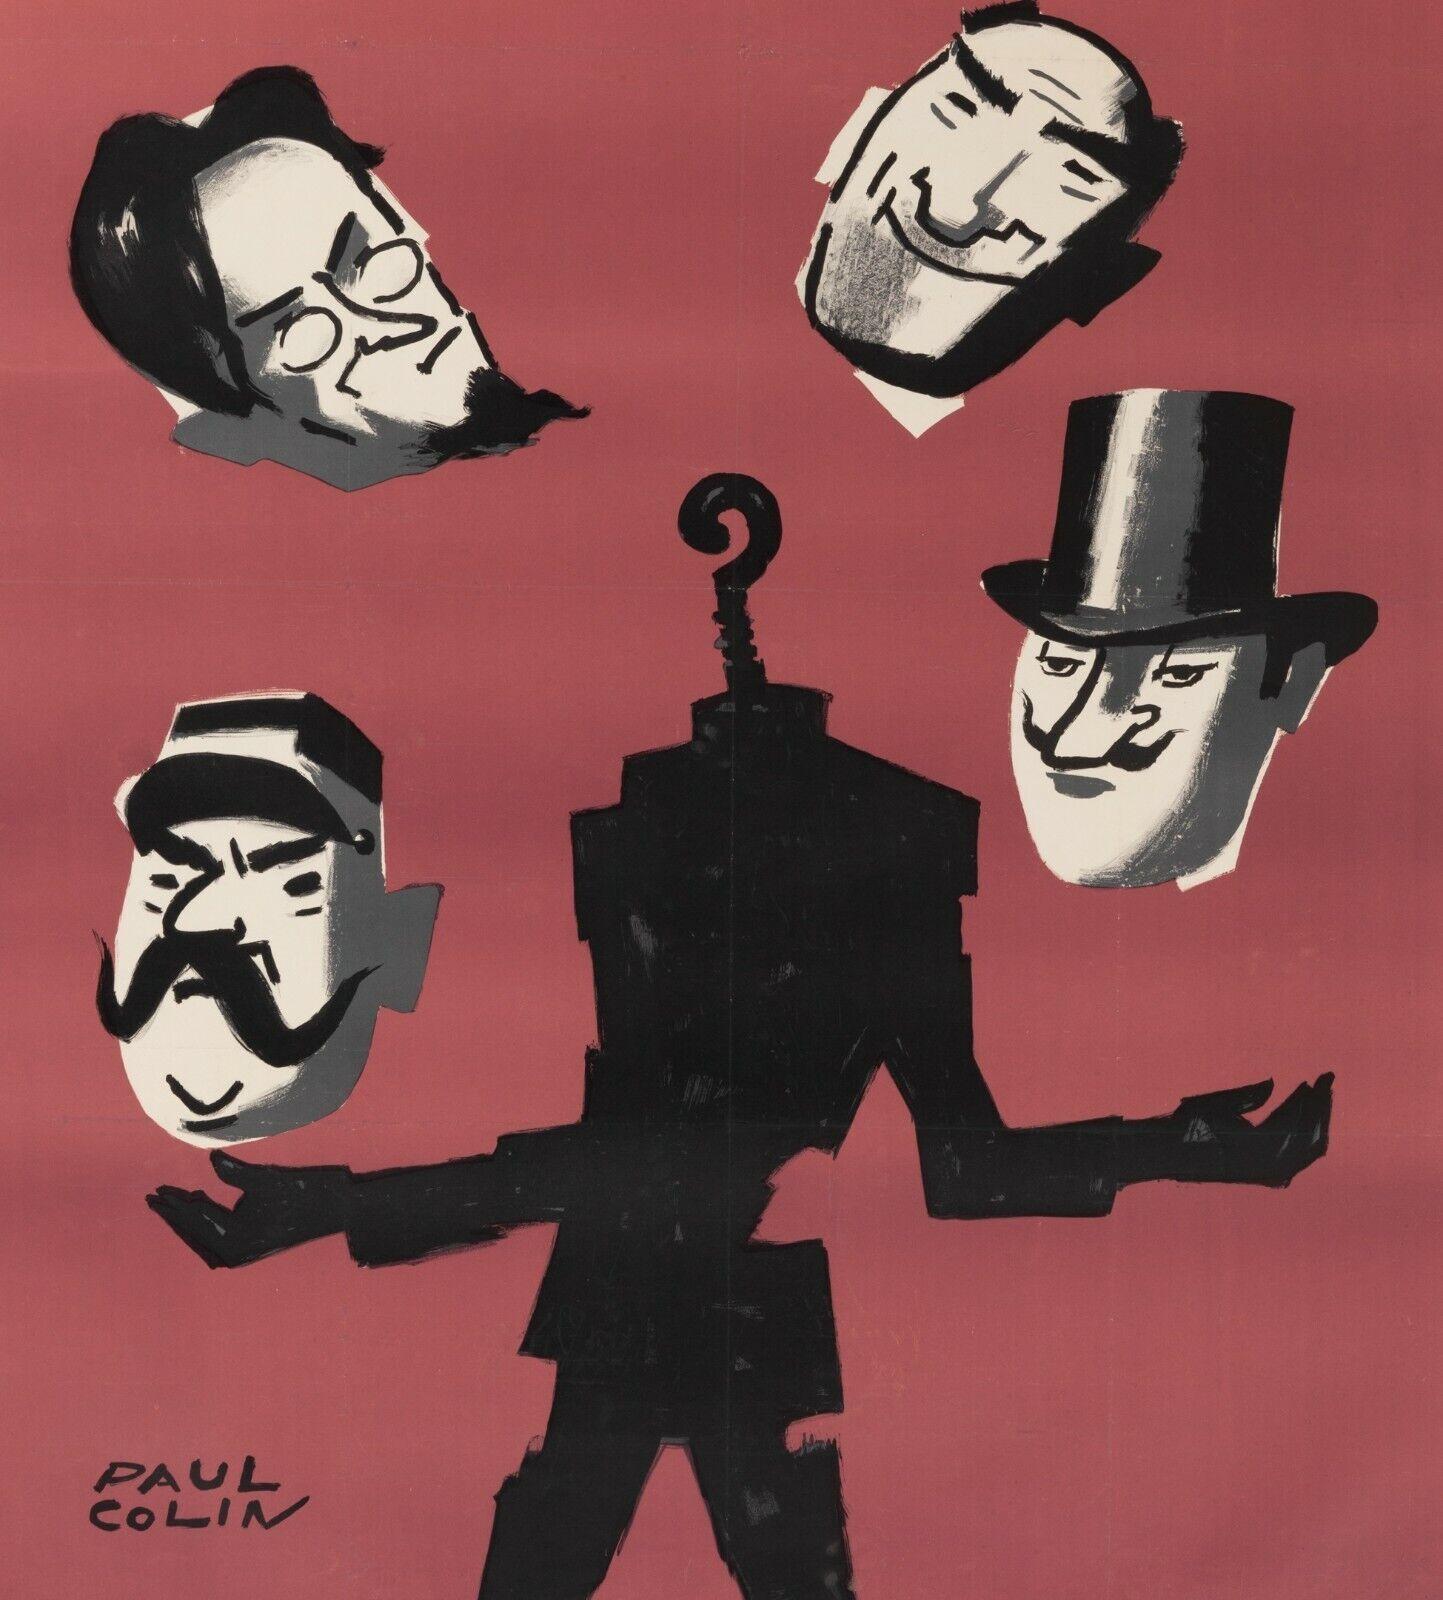 Mid-Century Modern Original Poster-Paul Colin-Bouffes Parisiens-Music Hall-Opera, 1964 For Sale